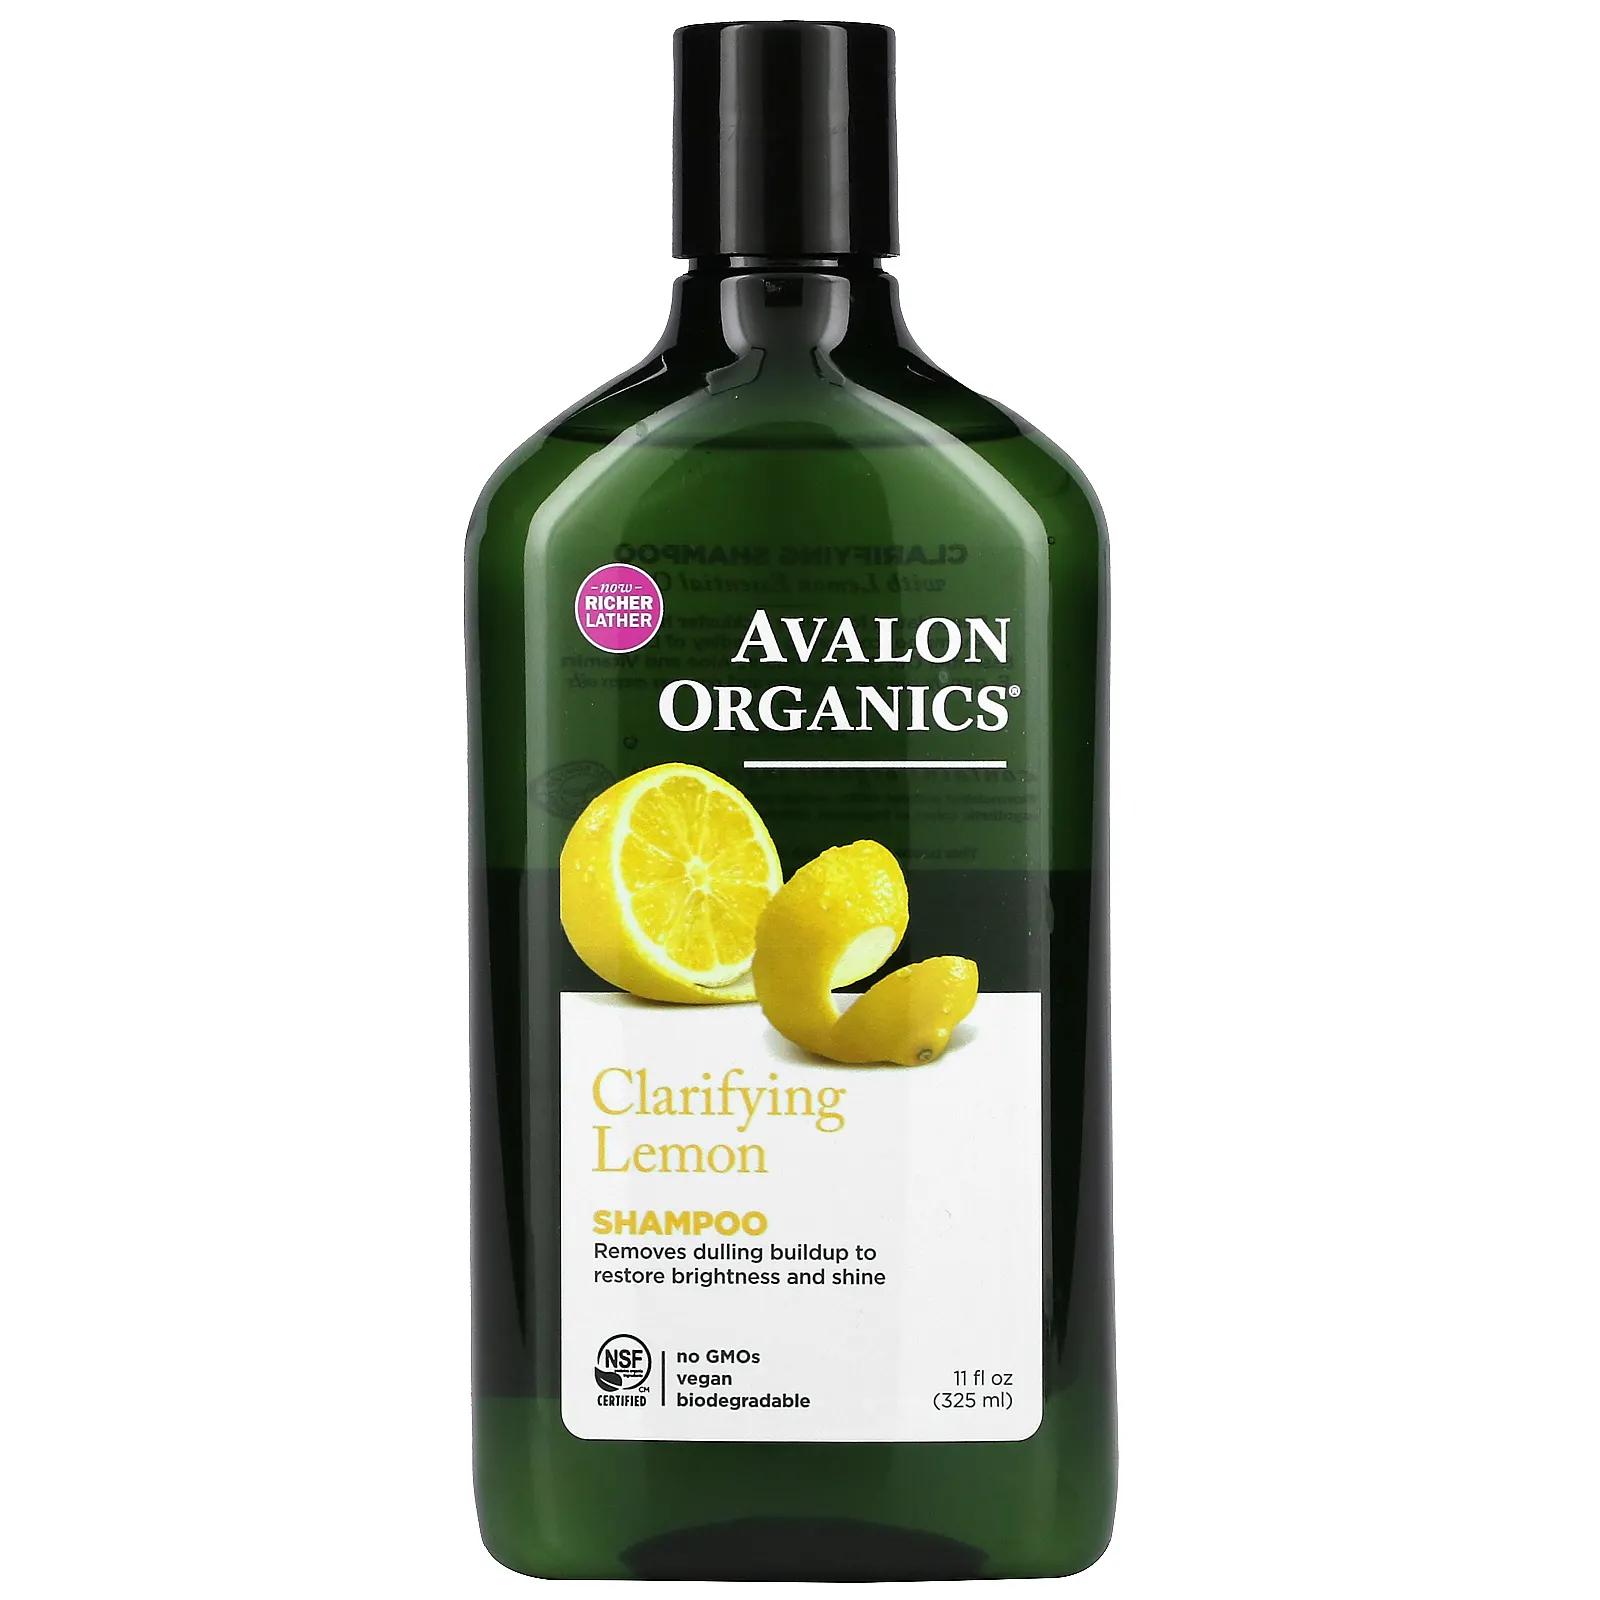 Avalon Organics Шампунь Clarifying Lemon 325 мл iwon organics organics protein stix sweet dijon 8 пакетиков по 42 г 1 5 унции